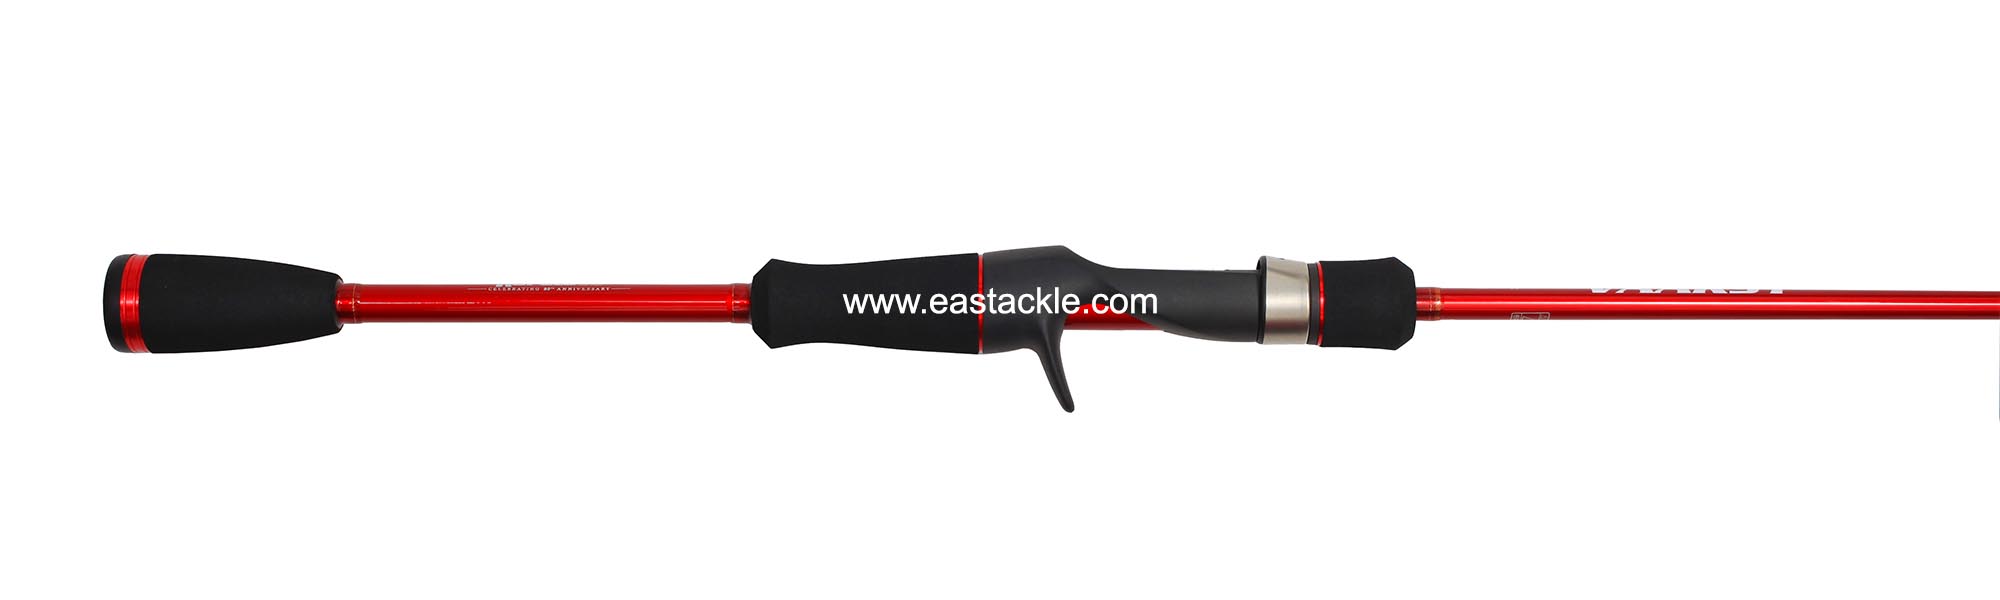 Rapala - Vaaksy - VAC662L - Baitcasting Rod - Handle Section - Side View | Eastackle